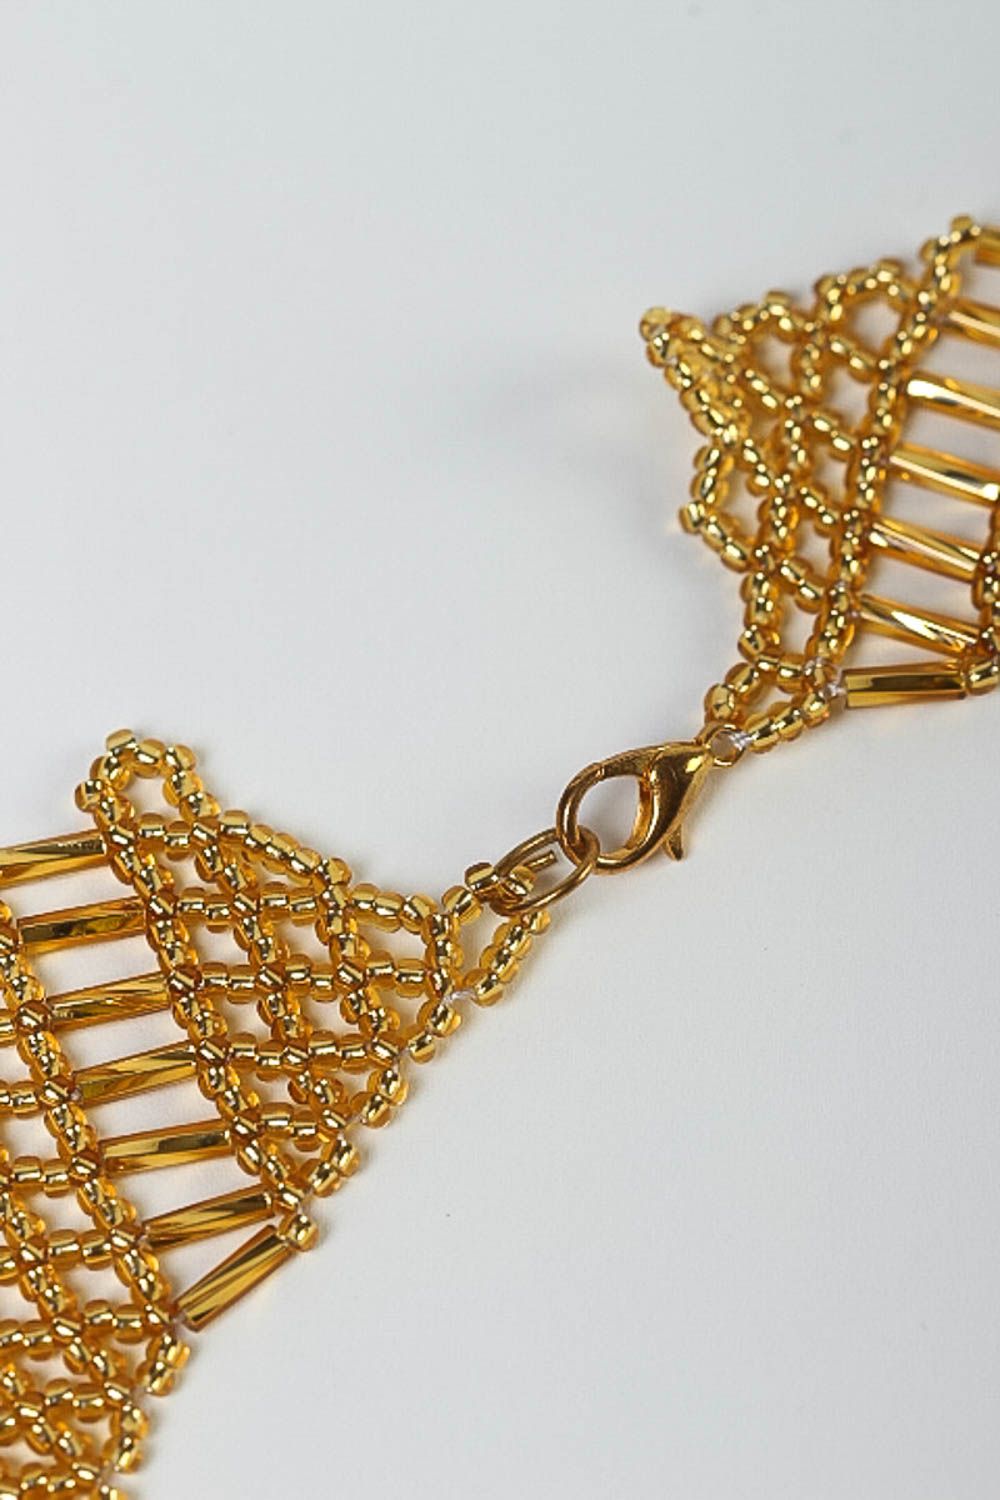 Stylish handmade beaded necklace cool jewelry designs beautiful jewellery photo 4